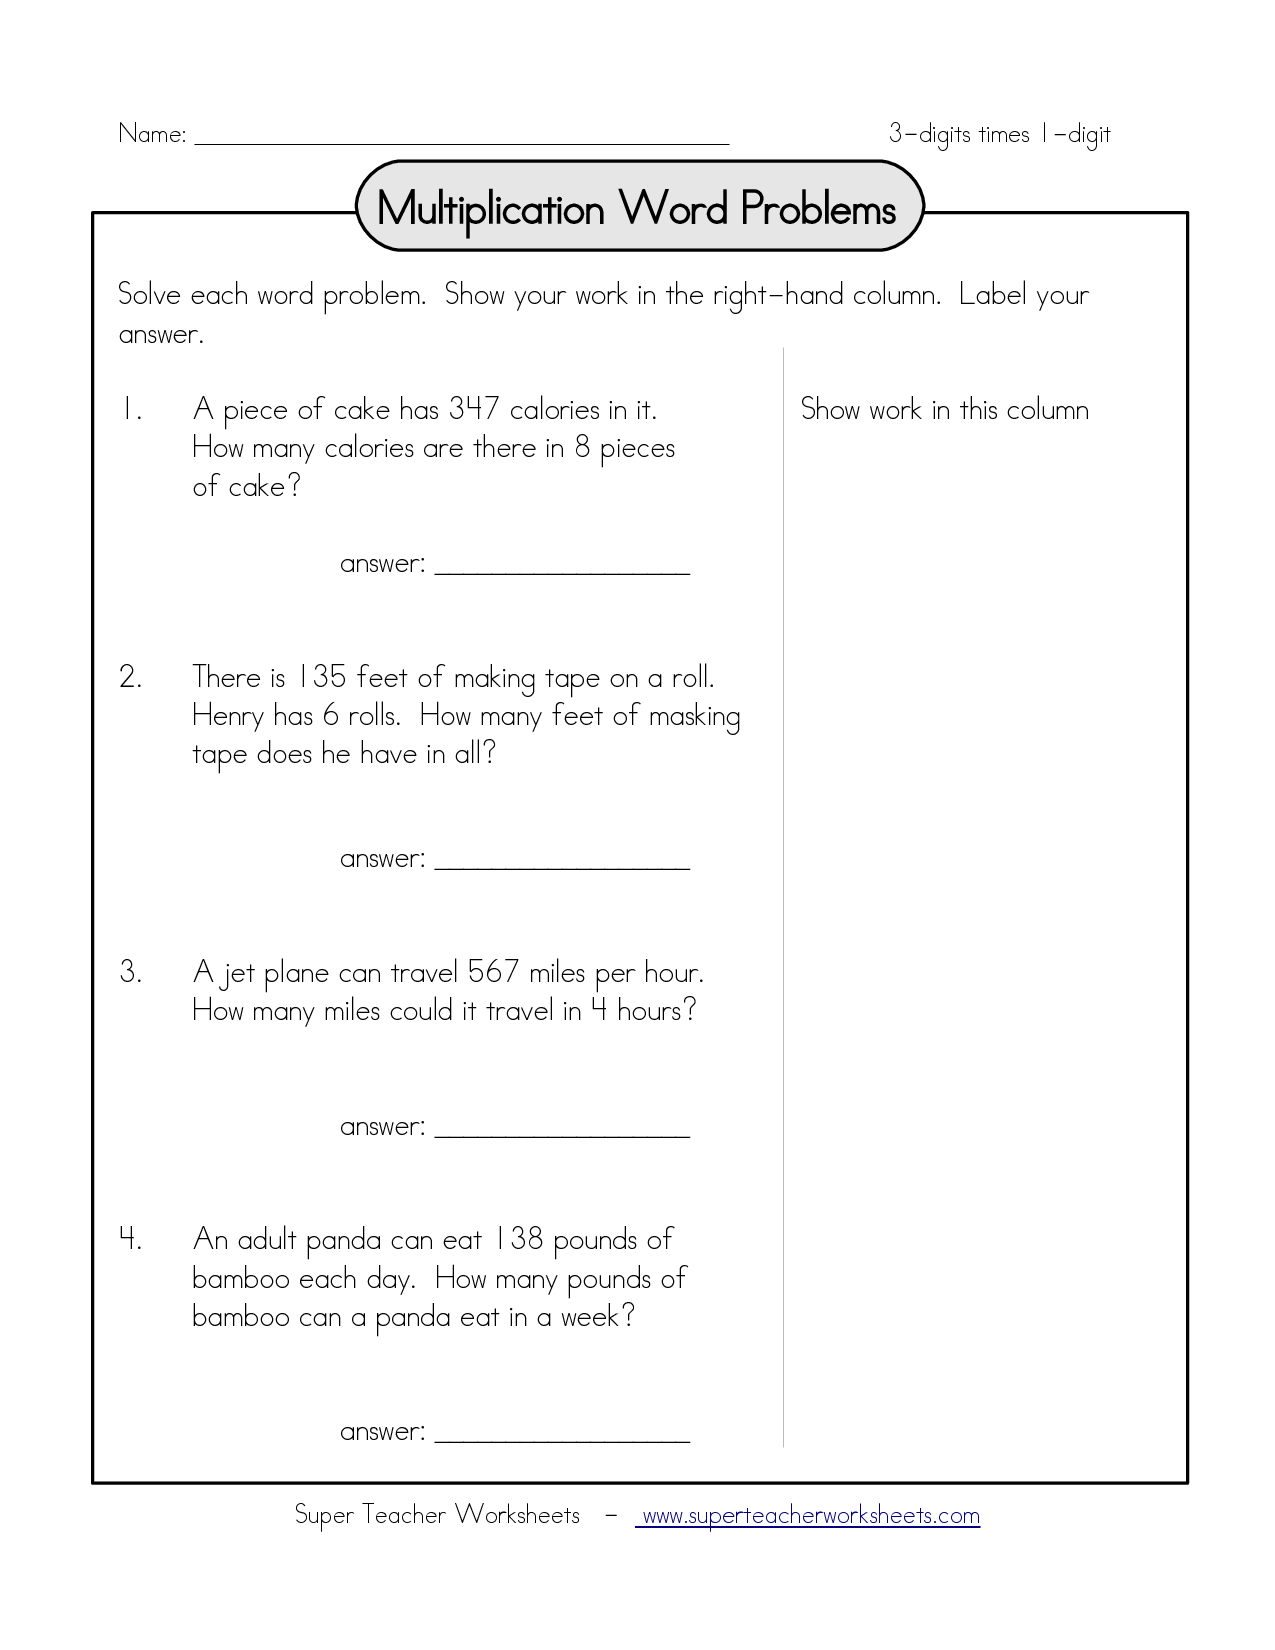 multiplication-word-problems-worksheet-multiplication-worksheets